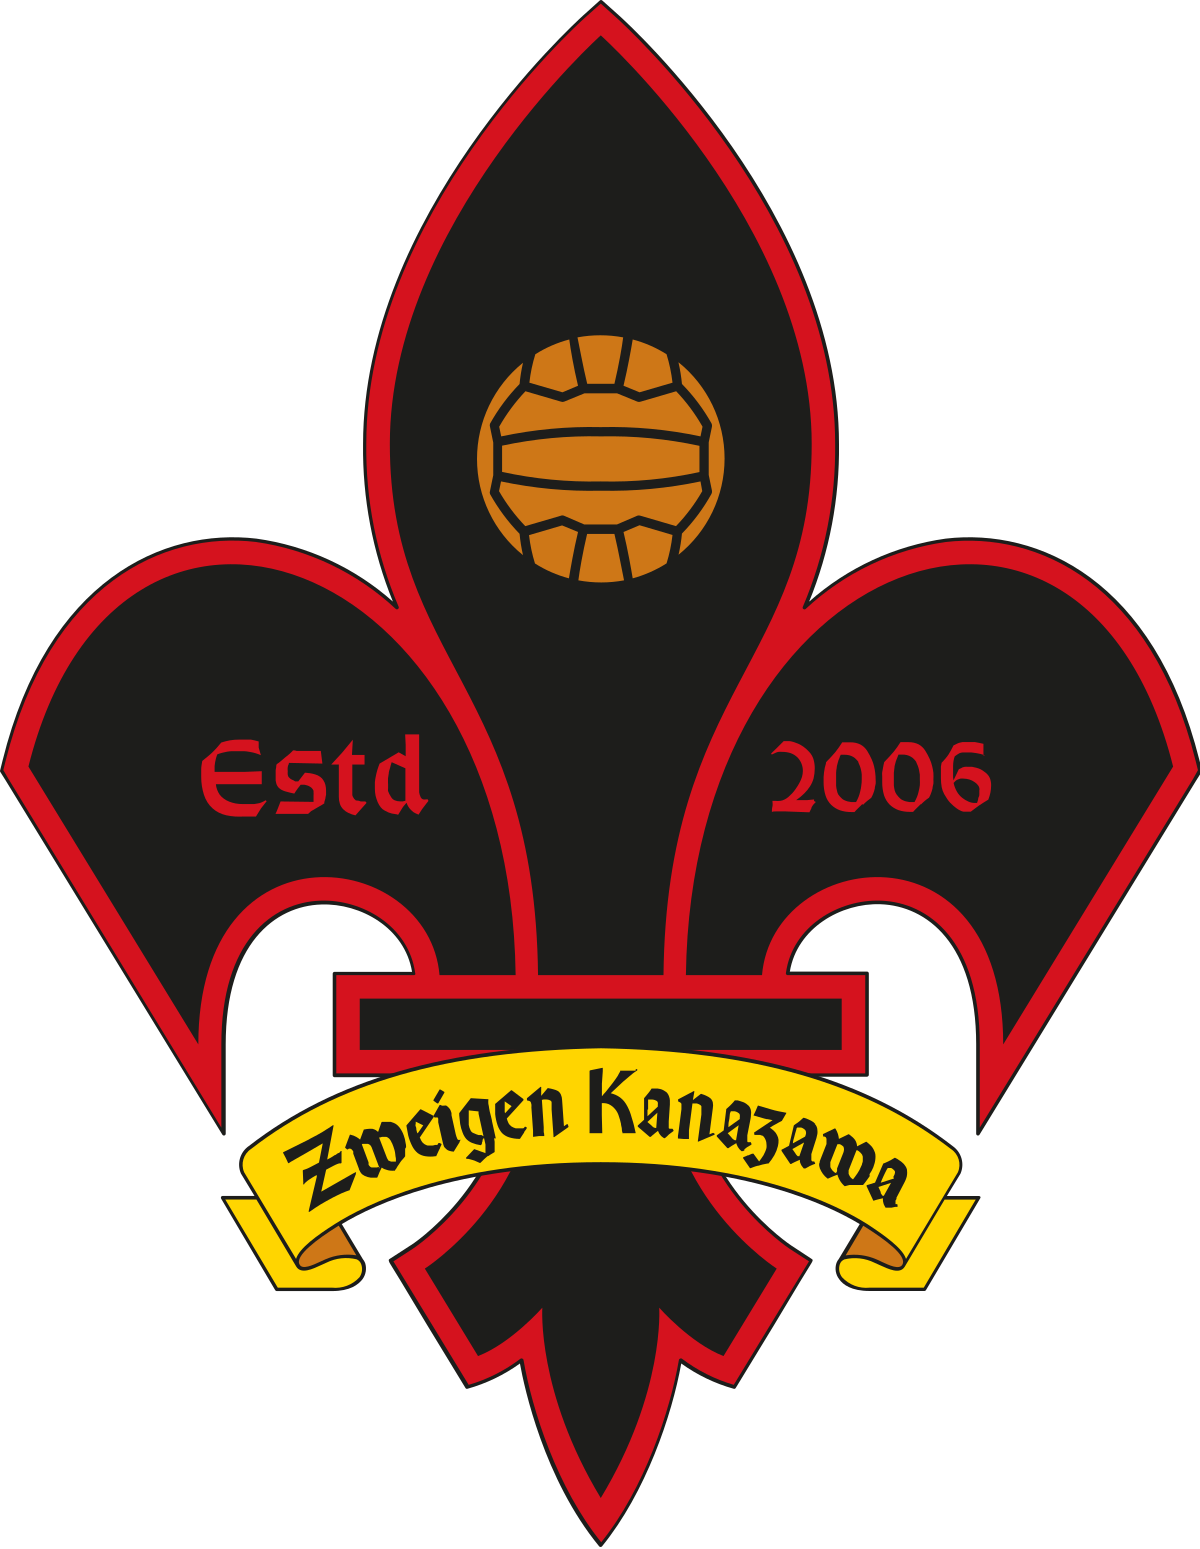 Wappen Ishikawa FC Zweigen Kanazawa